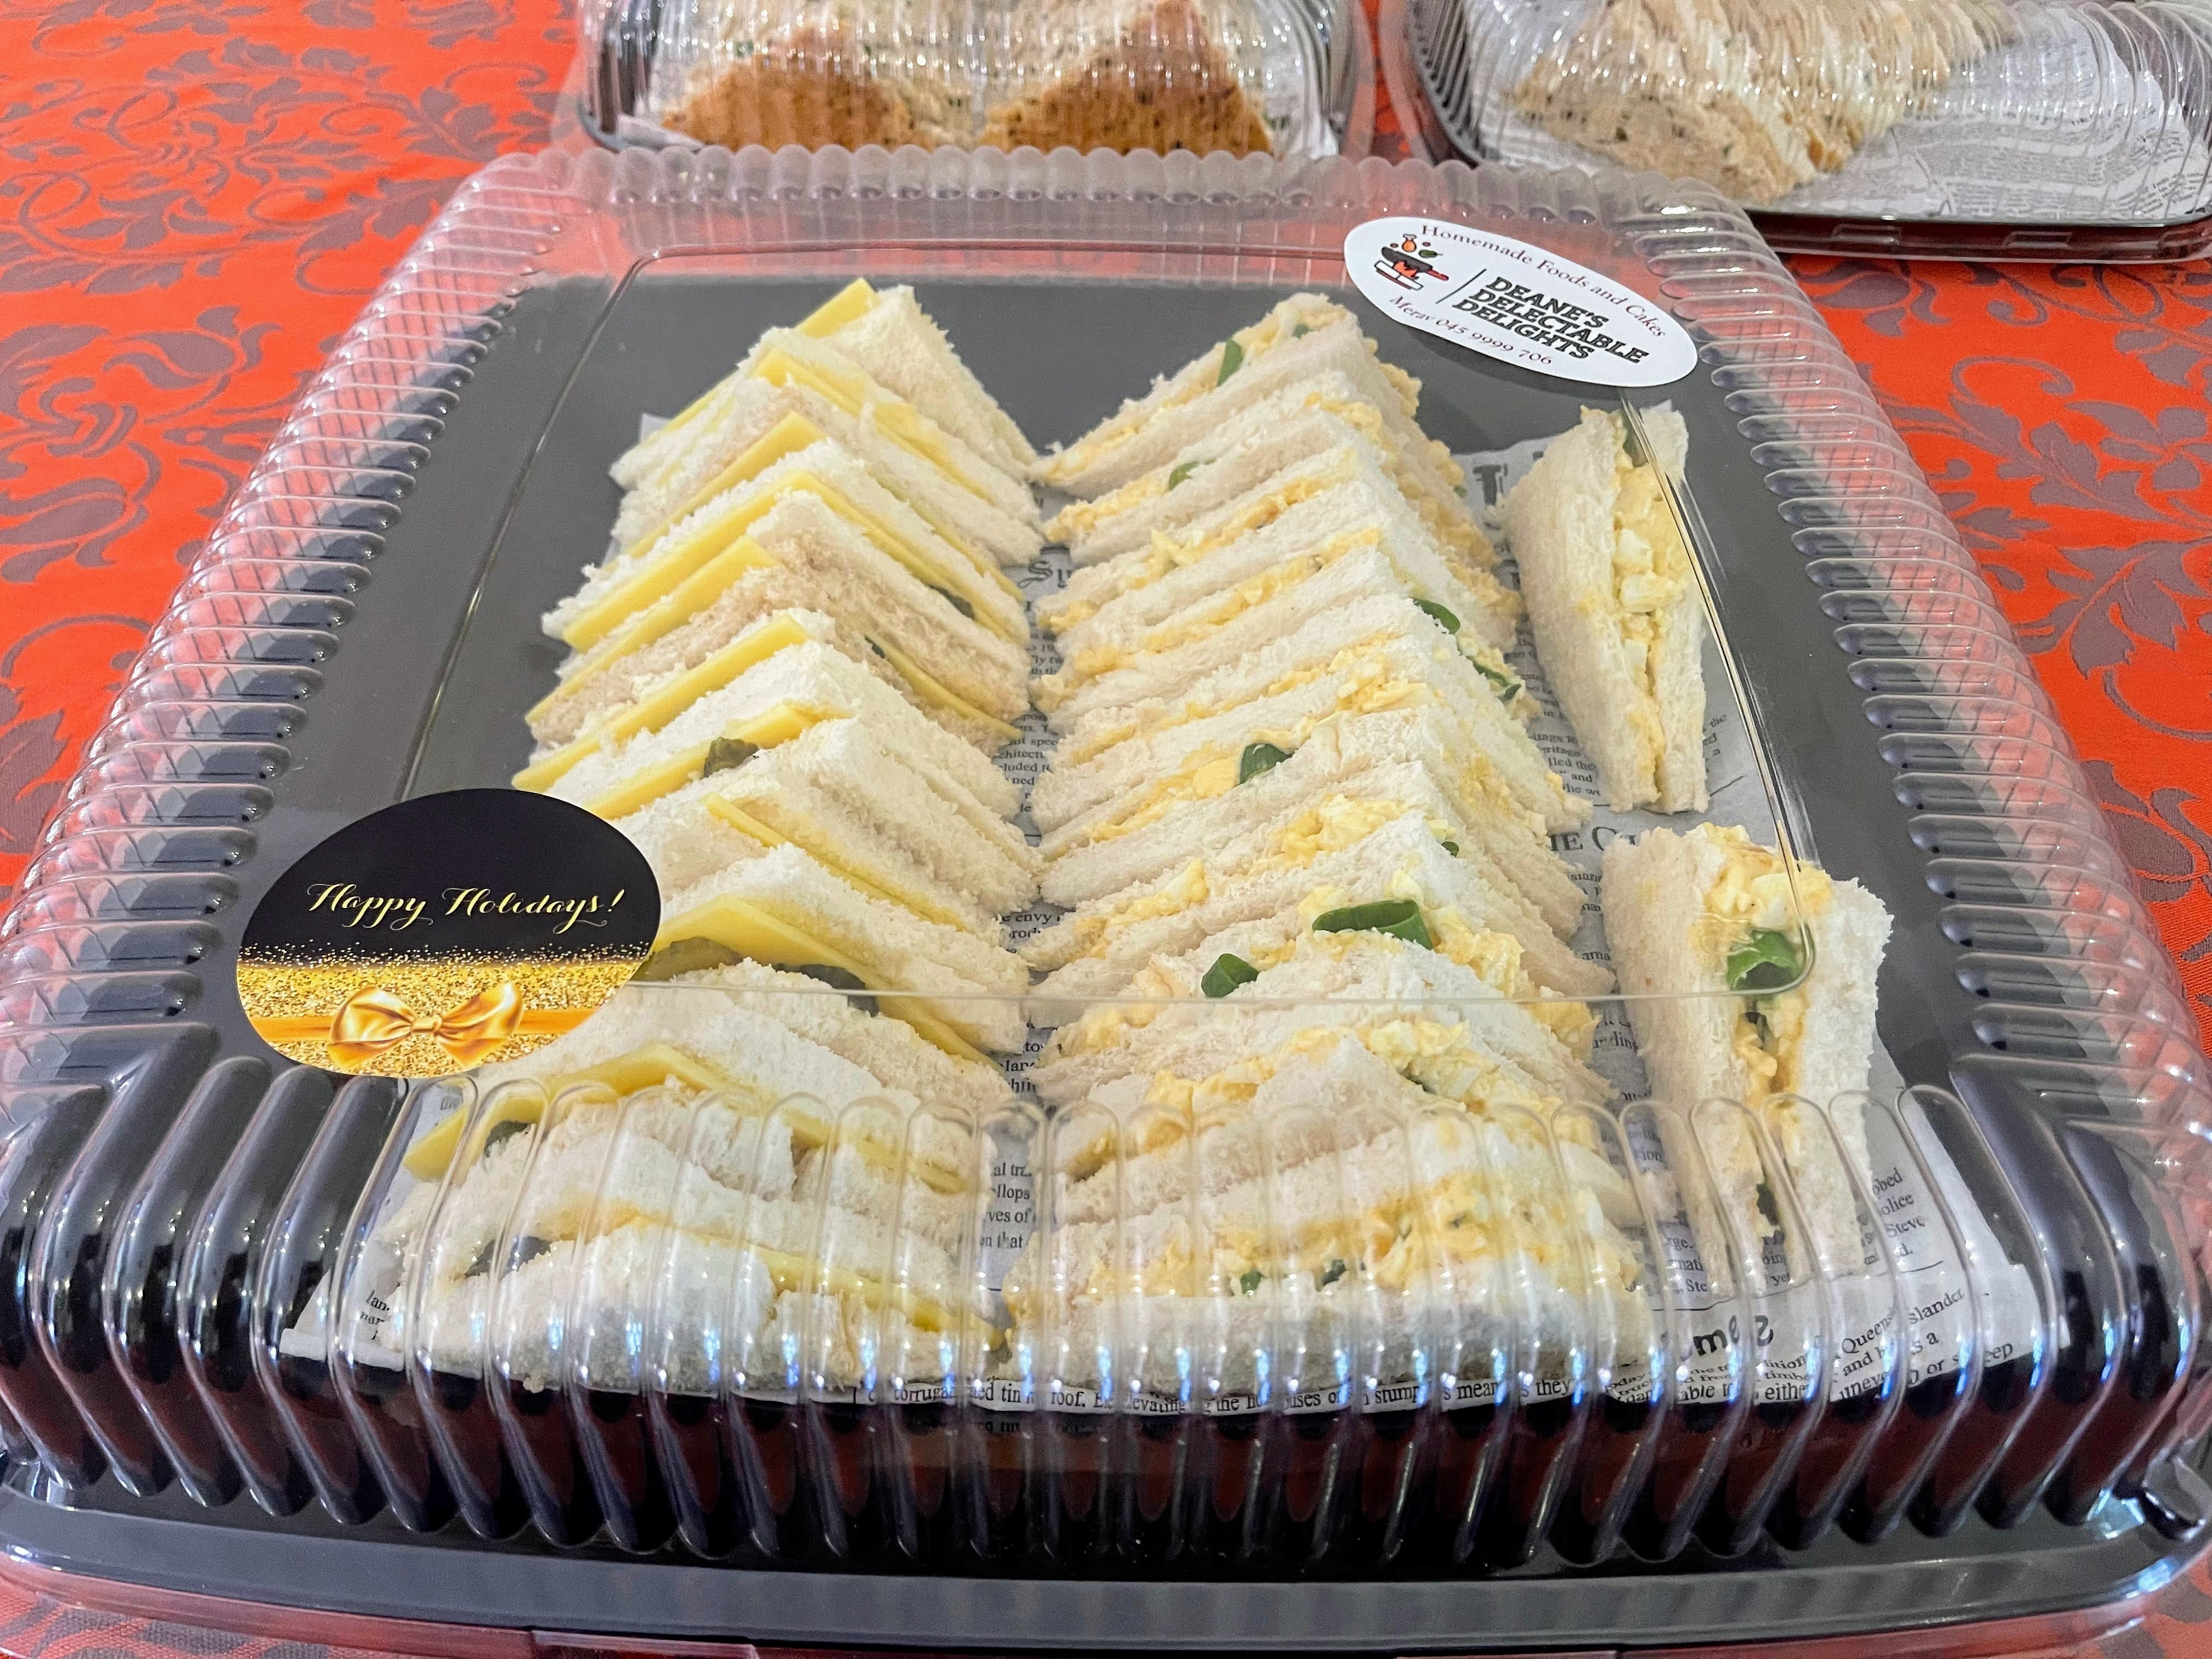 Club sandwich catering platter